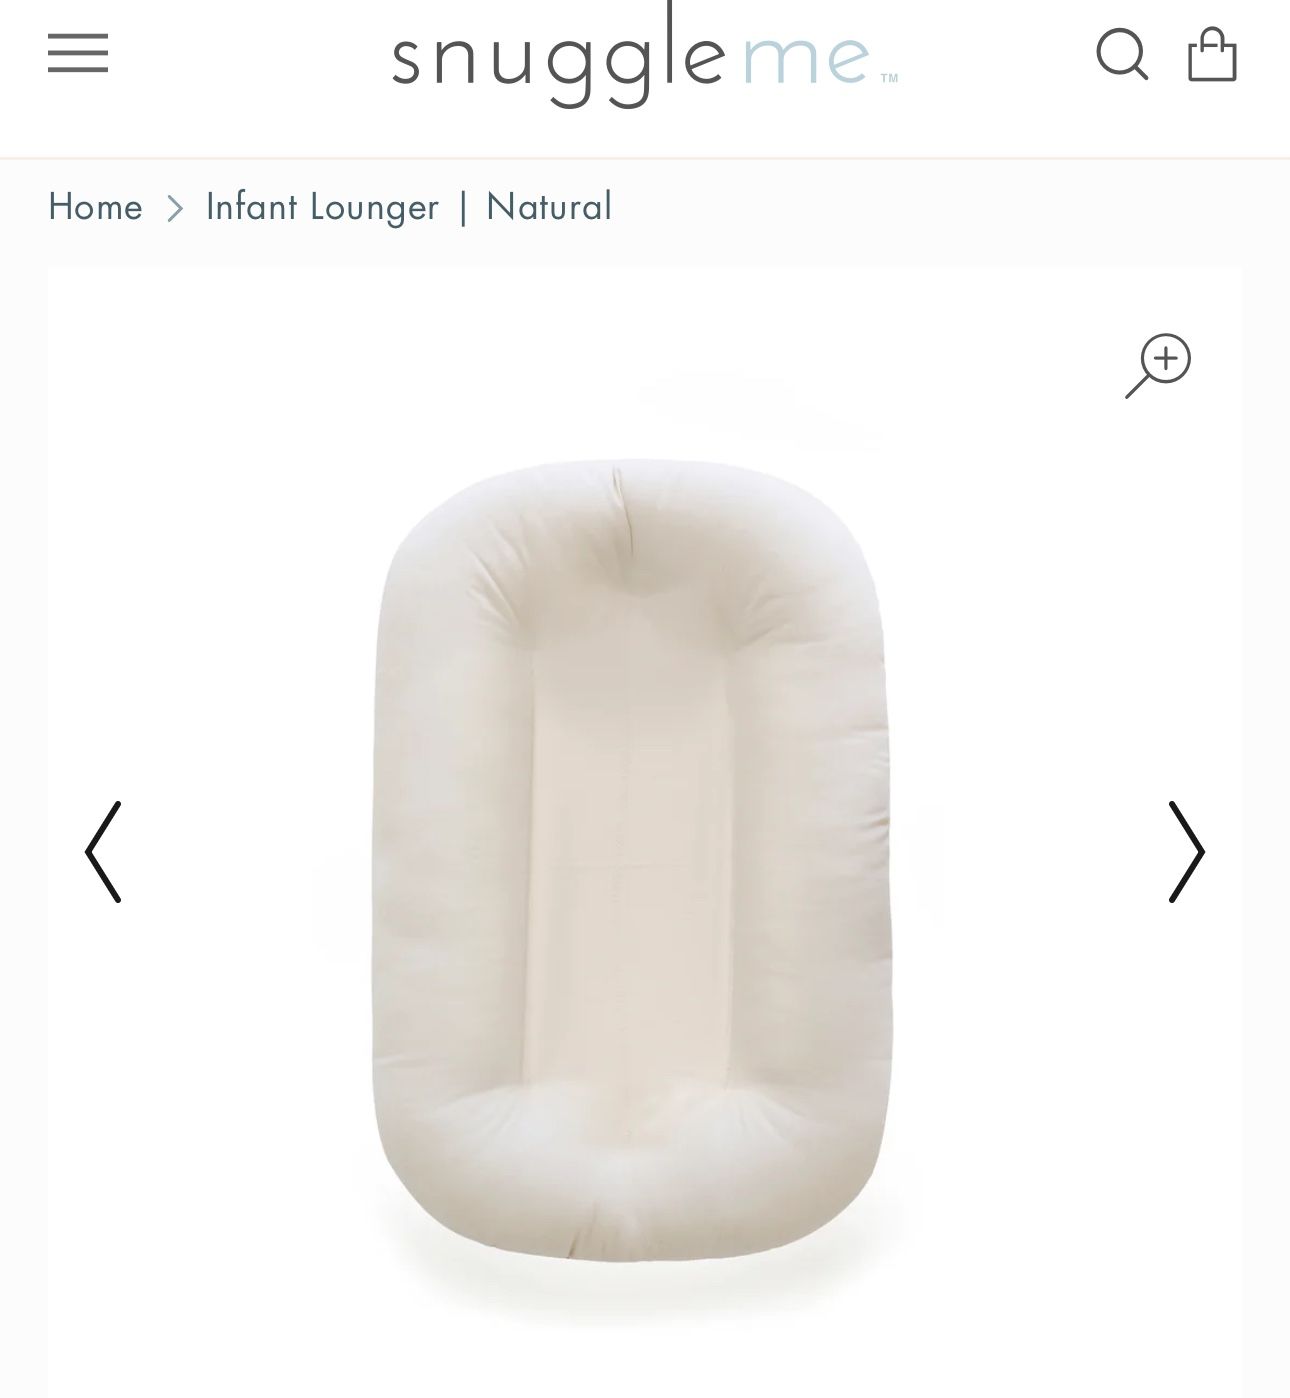 Snuggle me Infant Lounger | Natural 